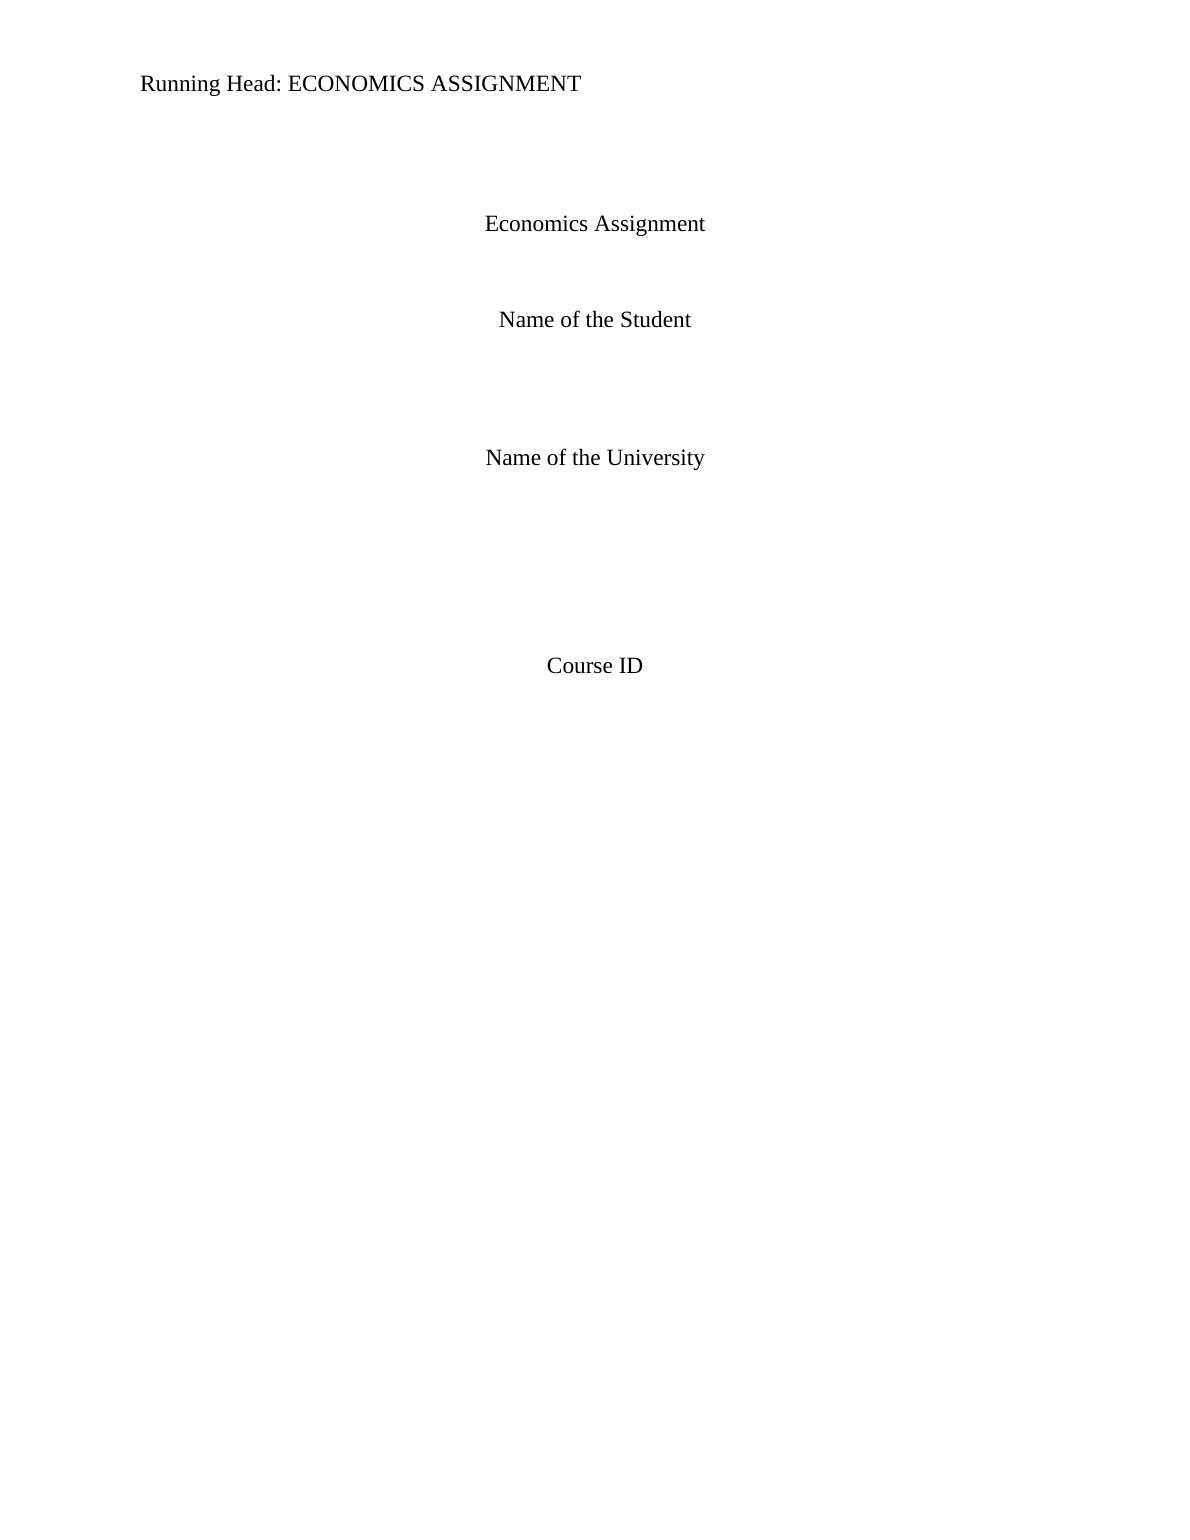 (pdf) Sample Assignment on Economics_1